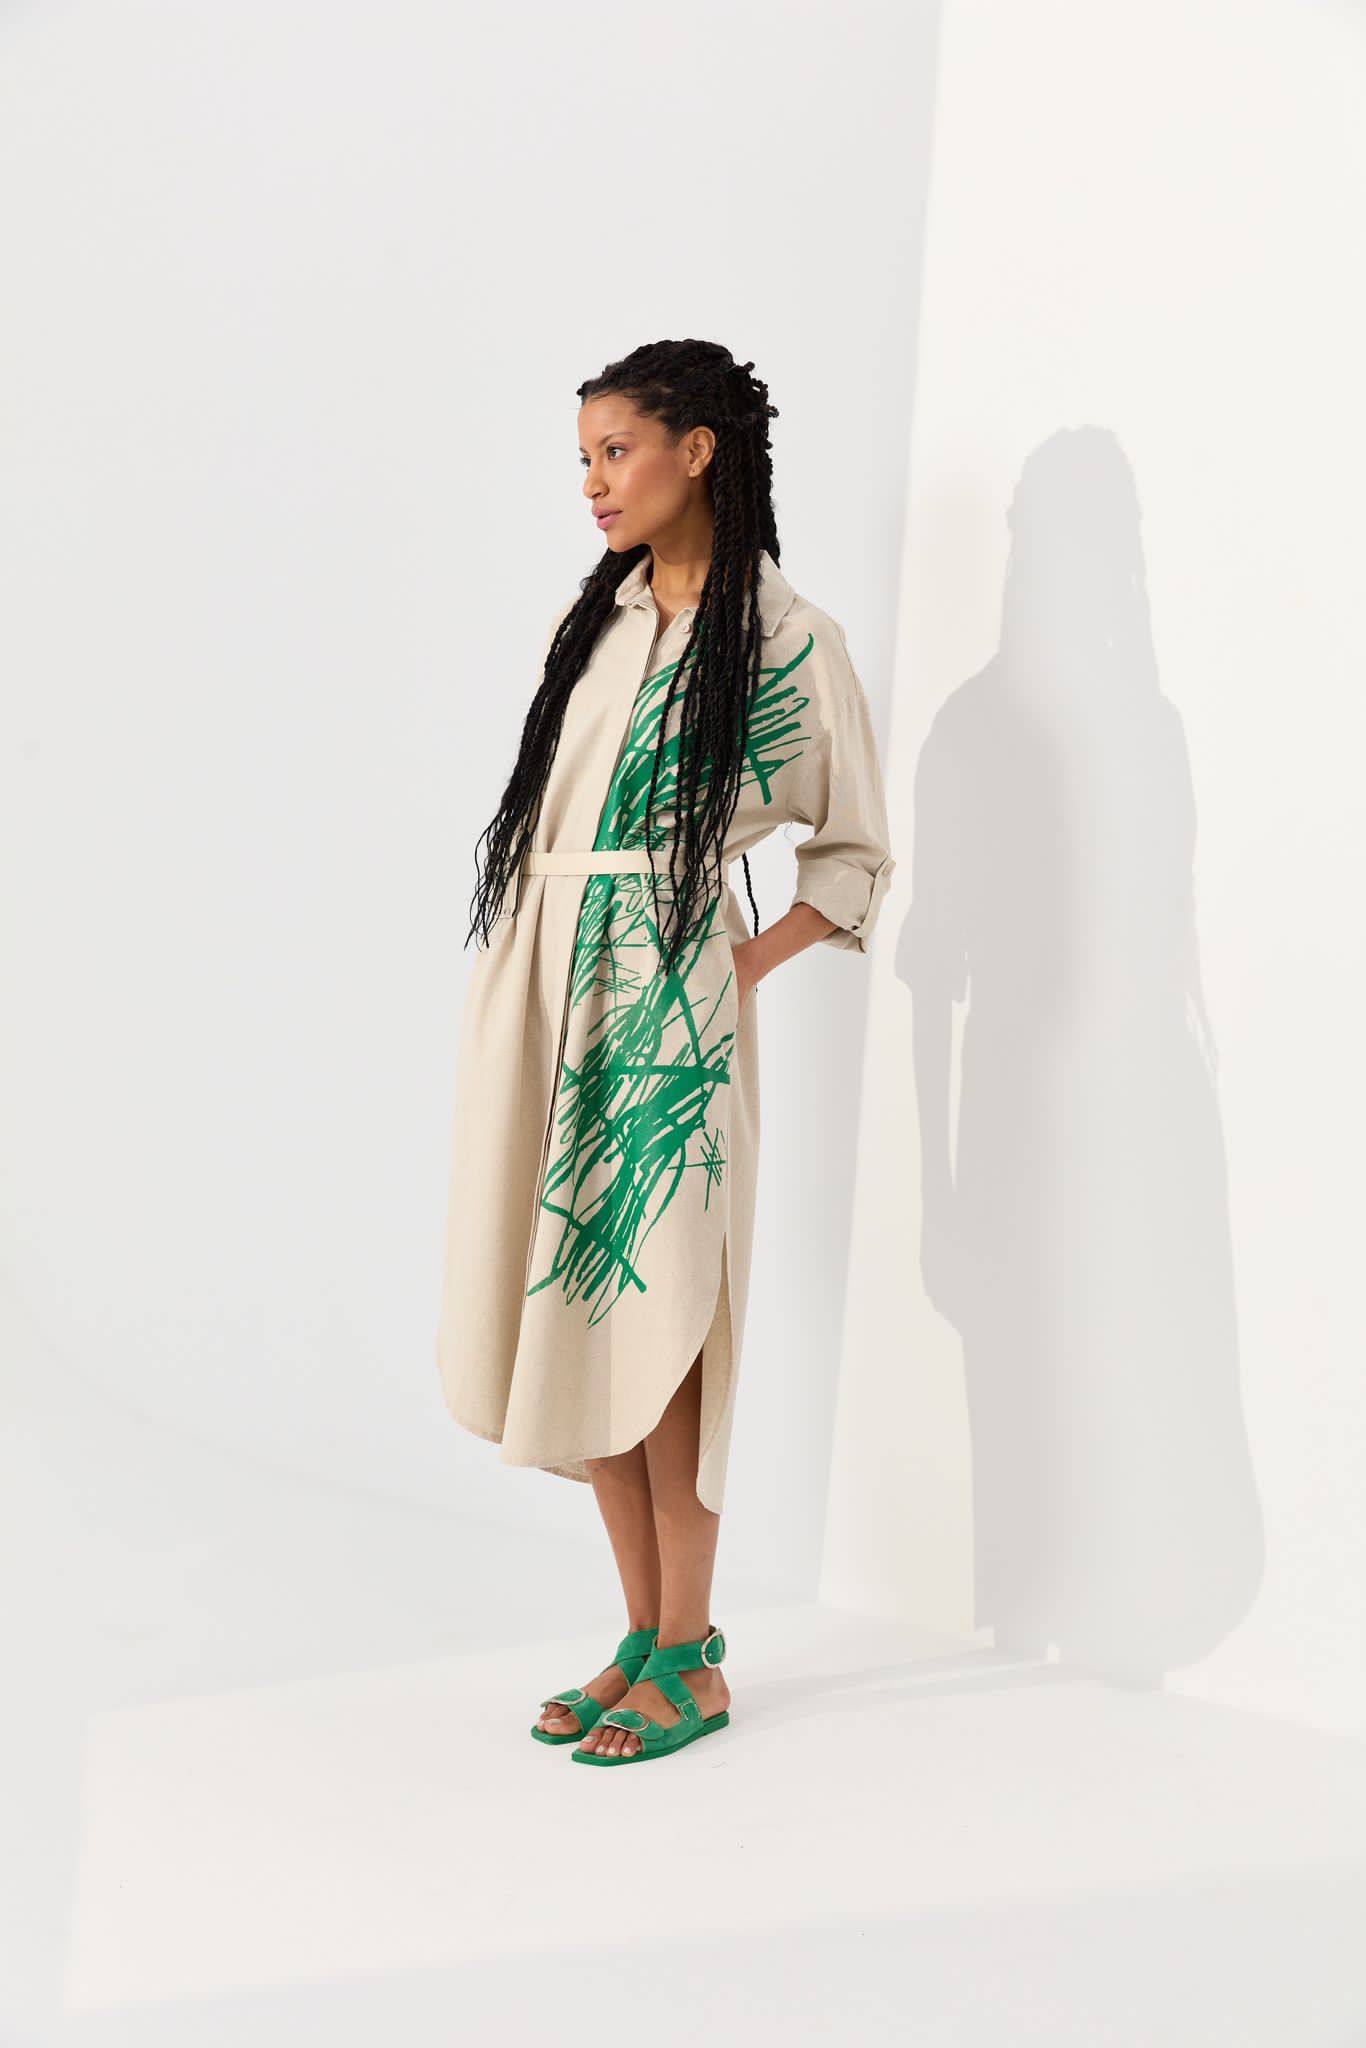 Linen Dress with Pleather Belt & Satchel Design - B-138 - Beige